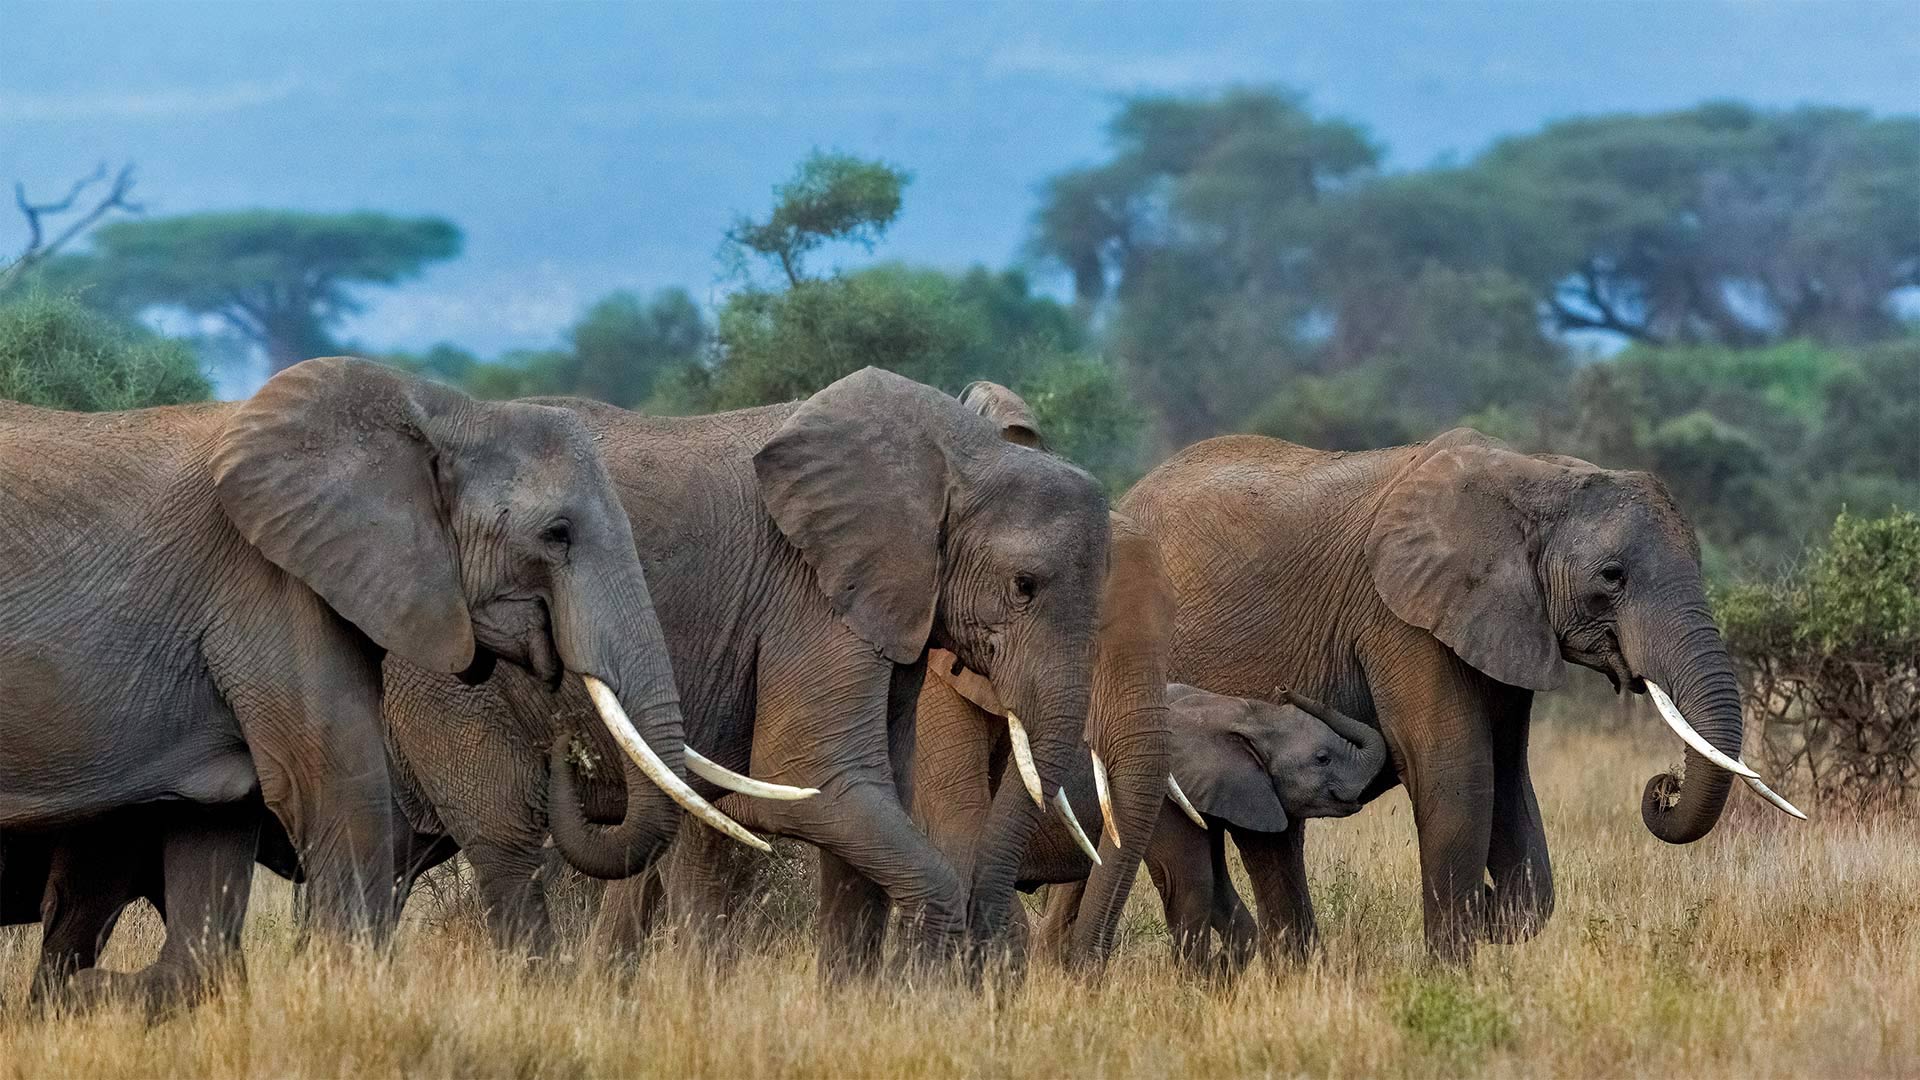 Herd of African elephants in Amboseli National Park, Kenya - Susan Portnoy/Shutterstock)